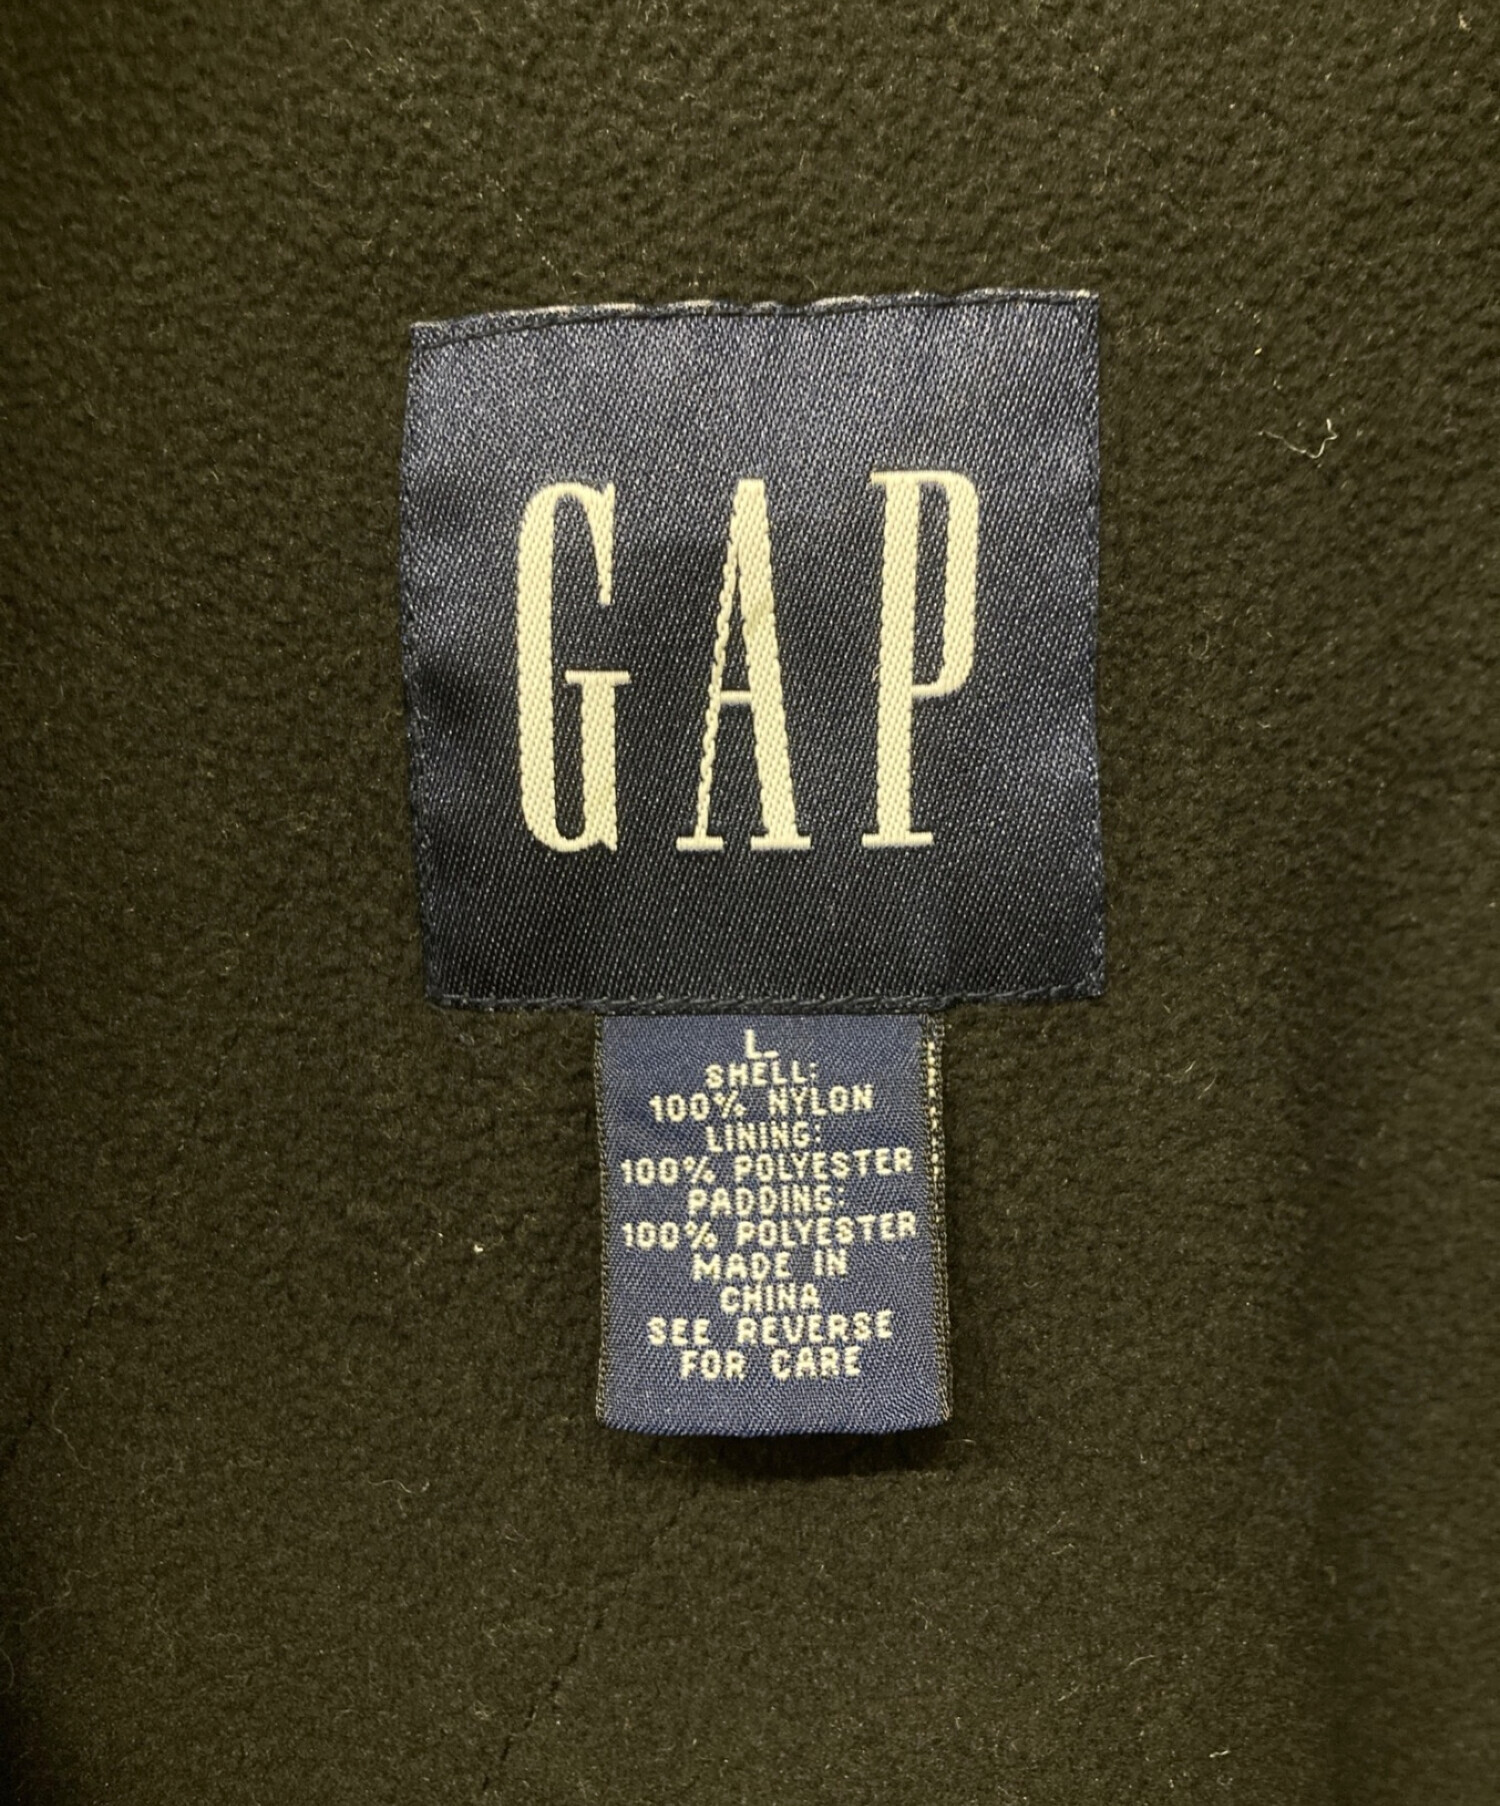 OLD GAP (オールドギャップ) Tactical Nylon fleece Vest ブラック サイズ:Ｌ